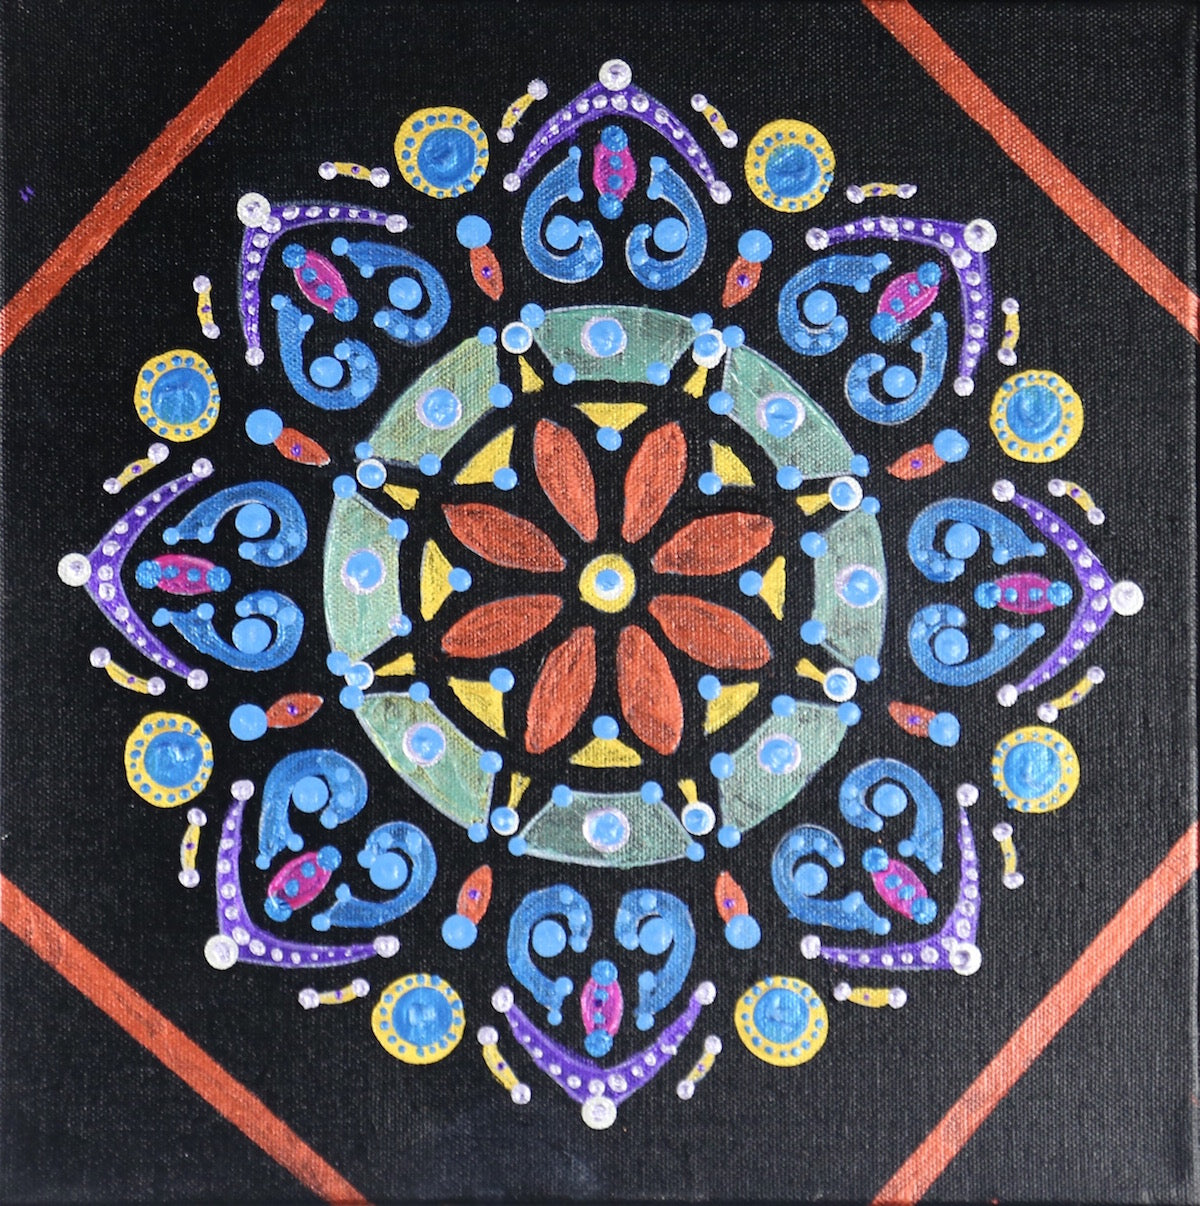 Wheel of Eight Mandala